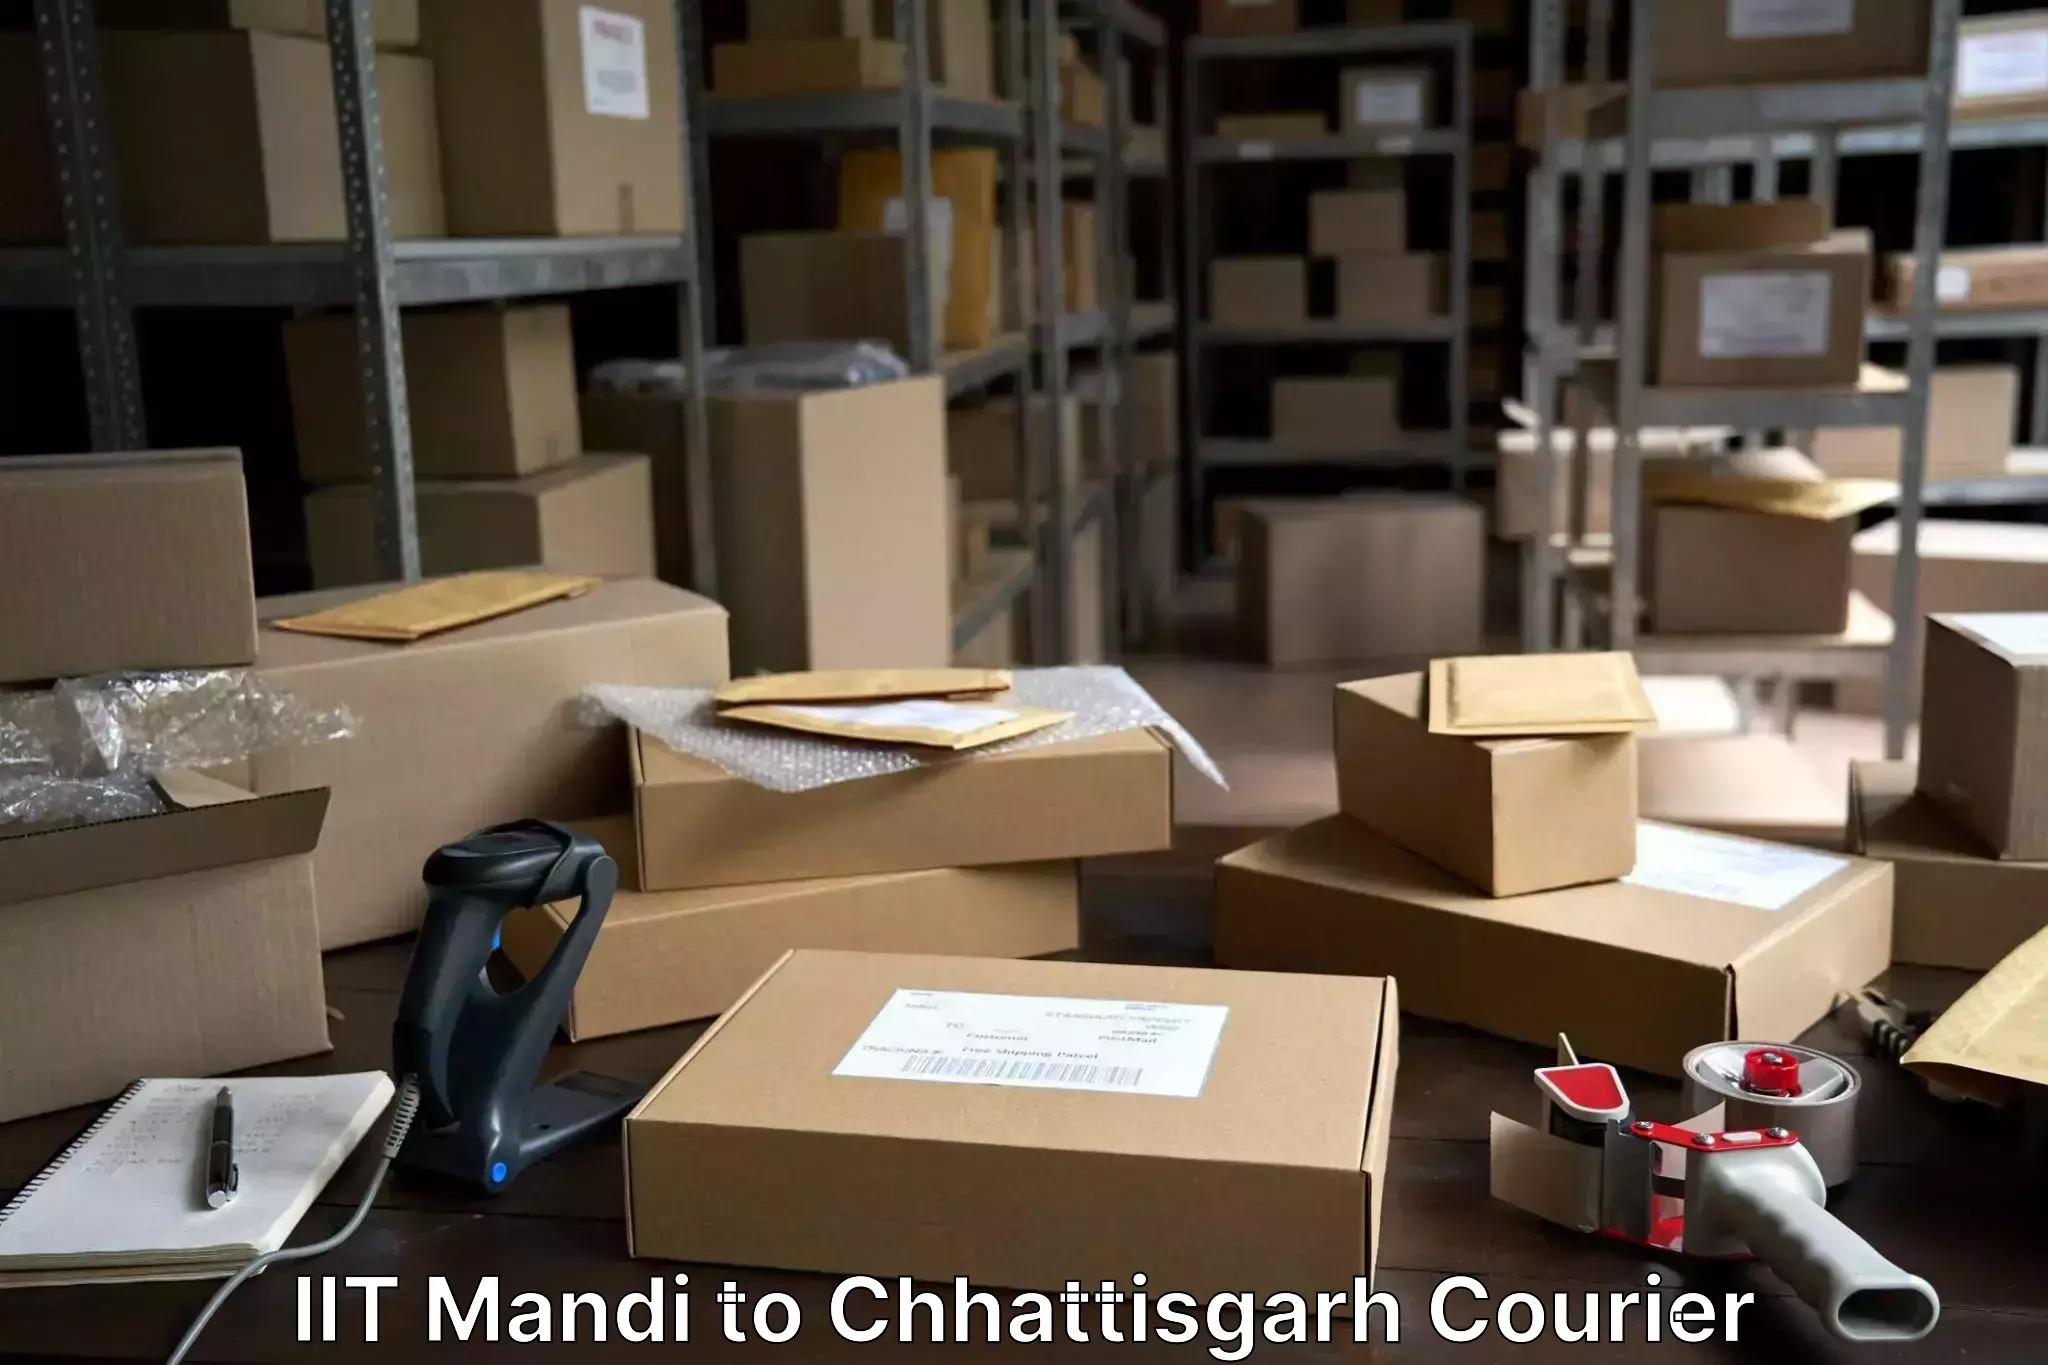 Baggage relocation service IIT Mandi to Chhattisgarh